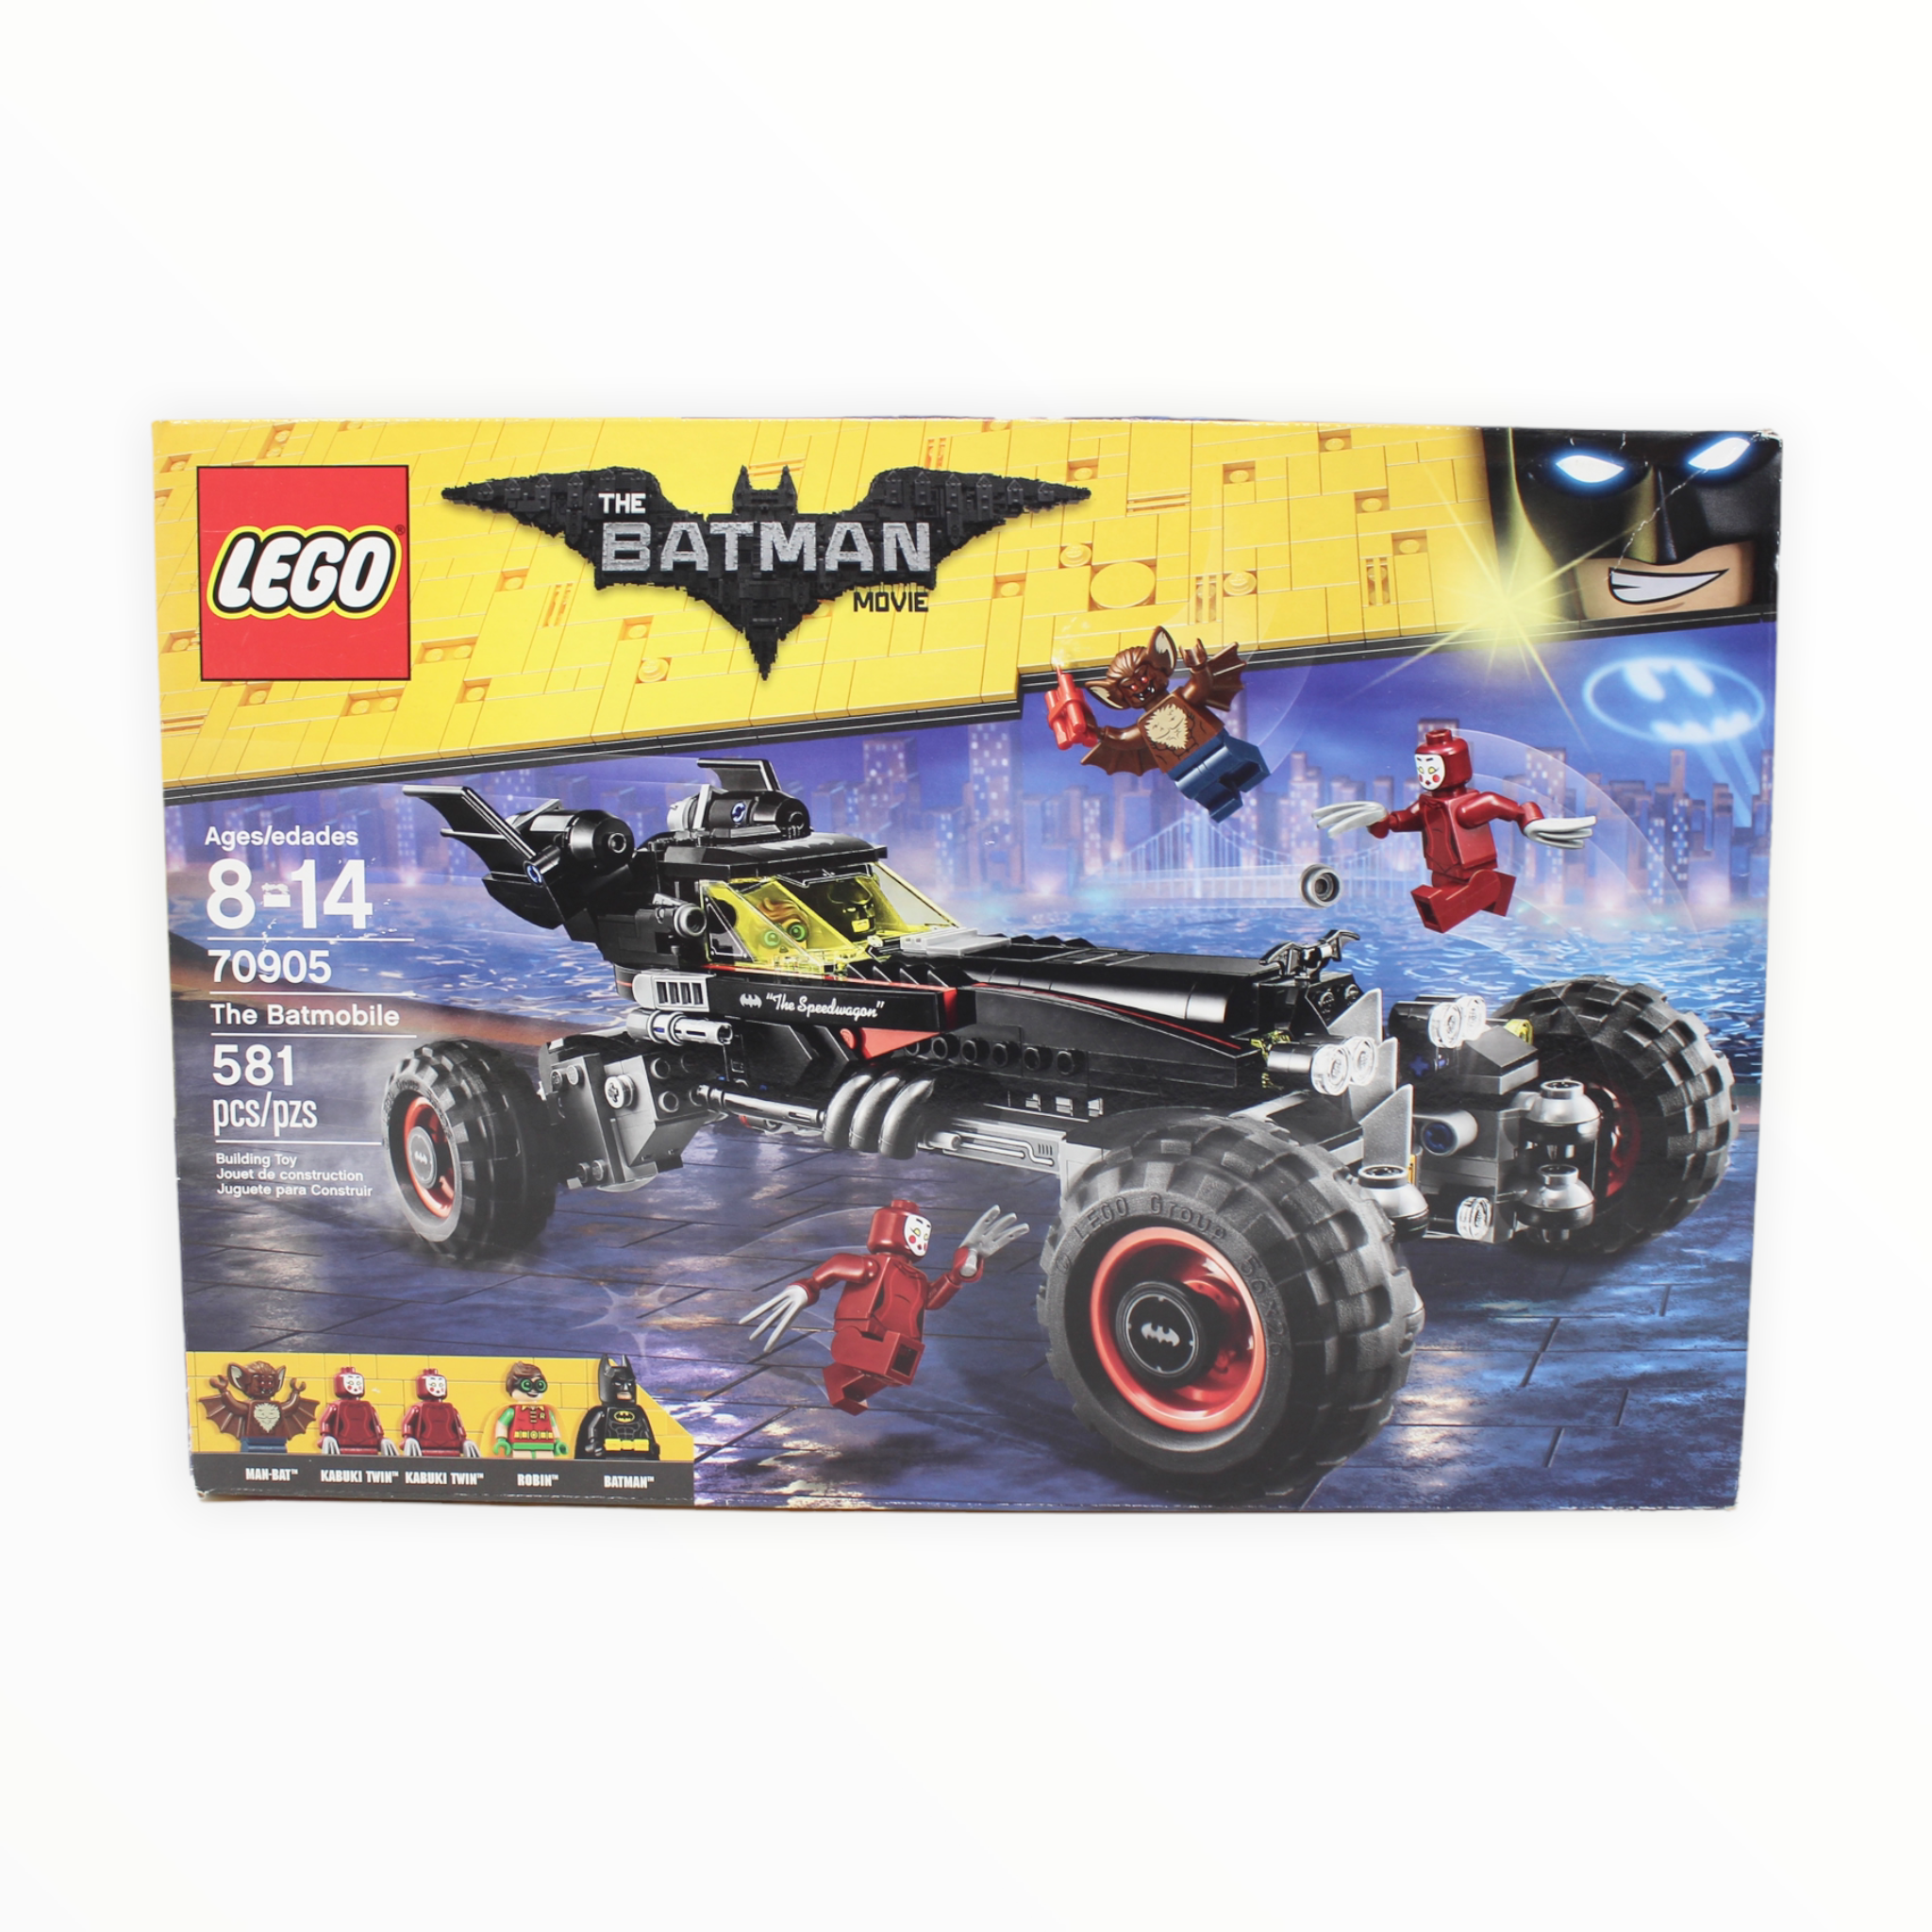 Certified Used Set 70905 The LEGO Batman Movie The Batmobile